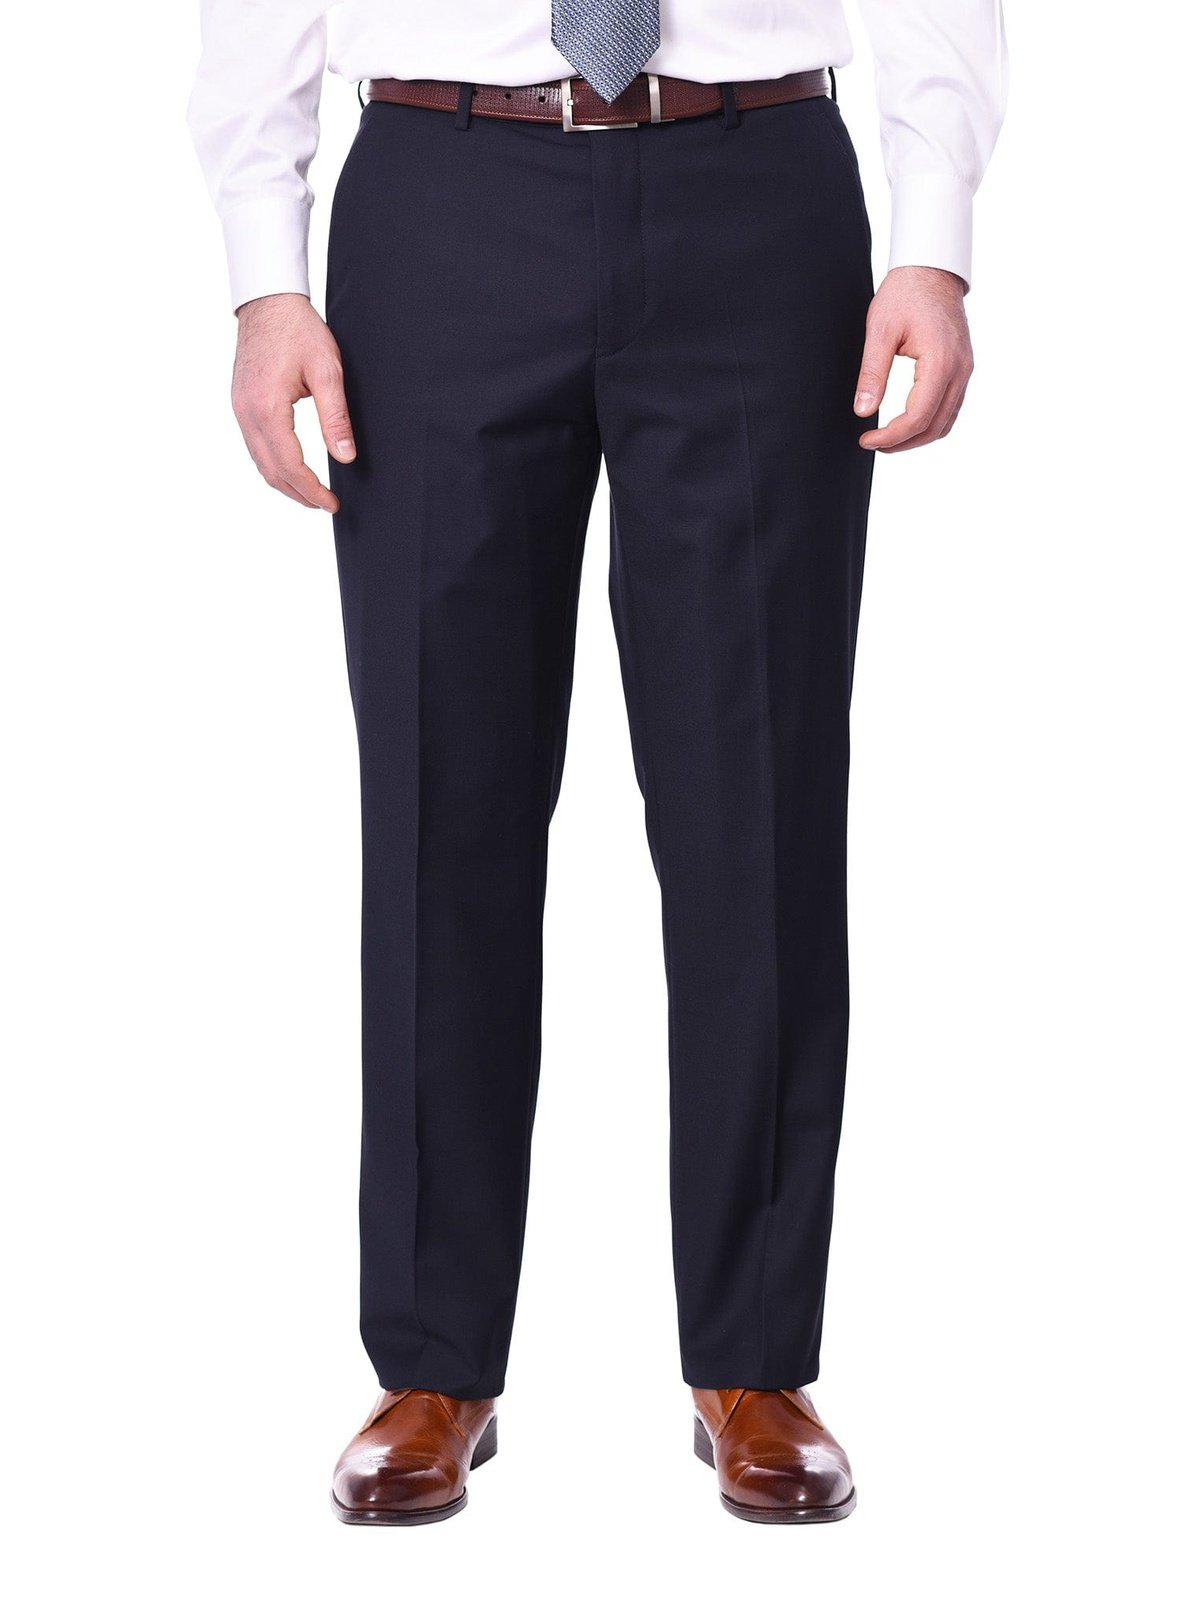 Louis Raphael Rosso Hidden Flex Men's Slacks / Dress Pants 34x32 Khaki  Cuffed